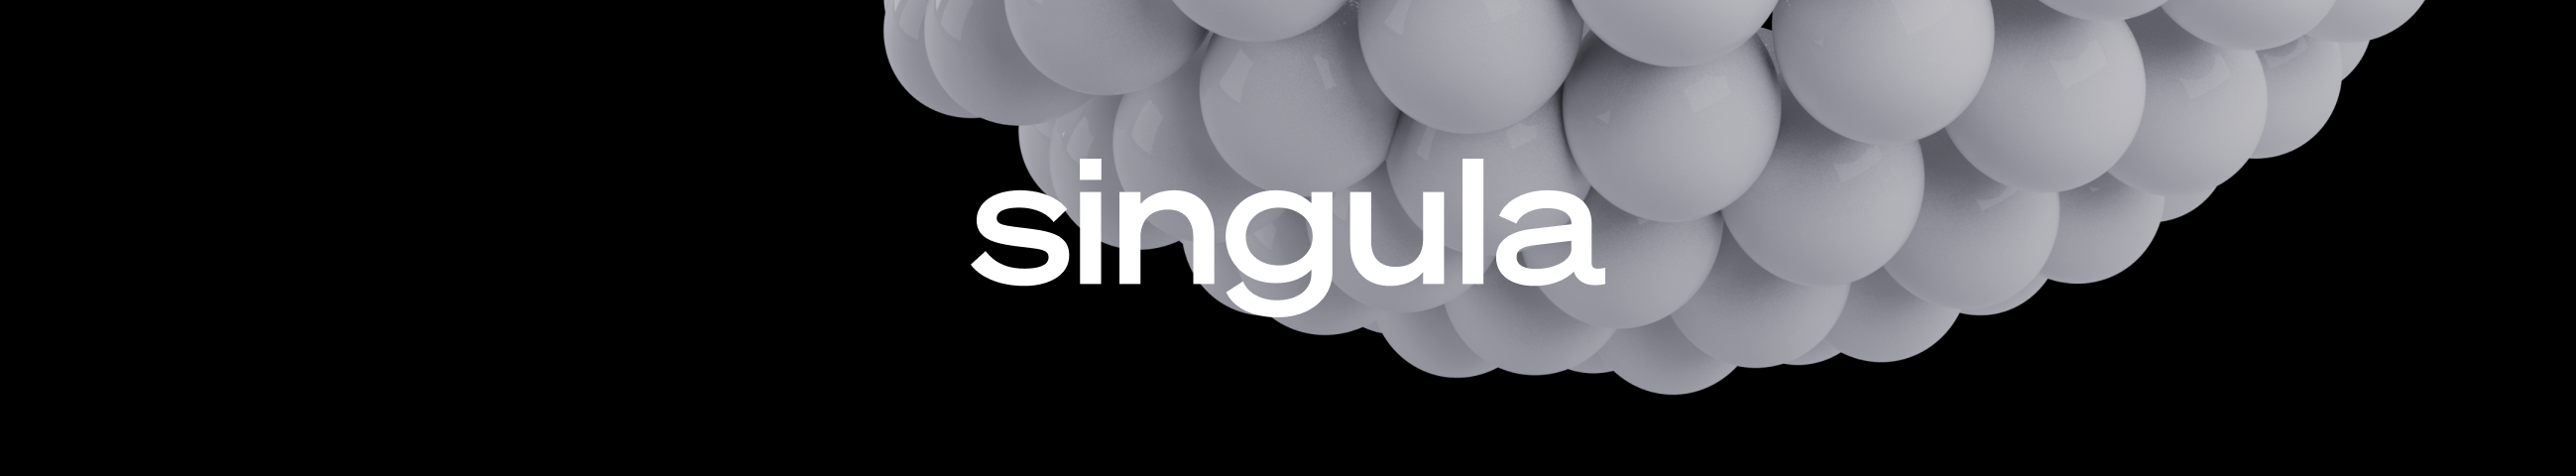 Singula Team's profile banner